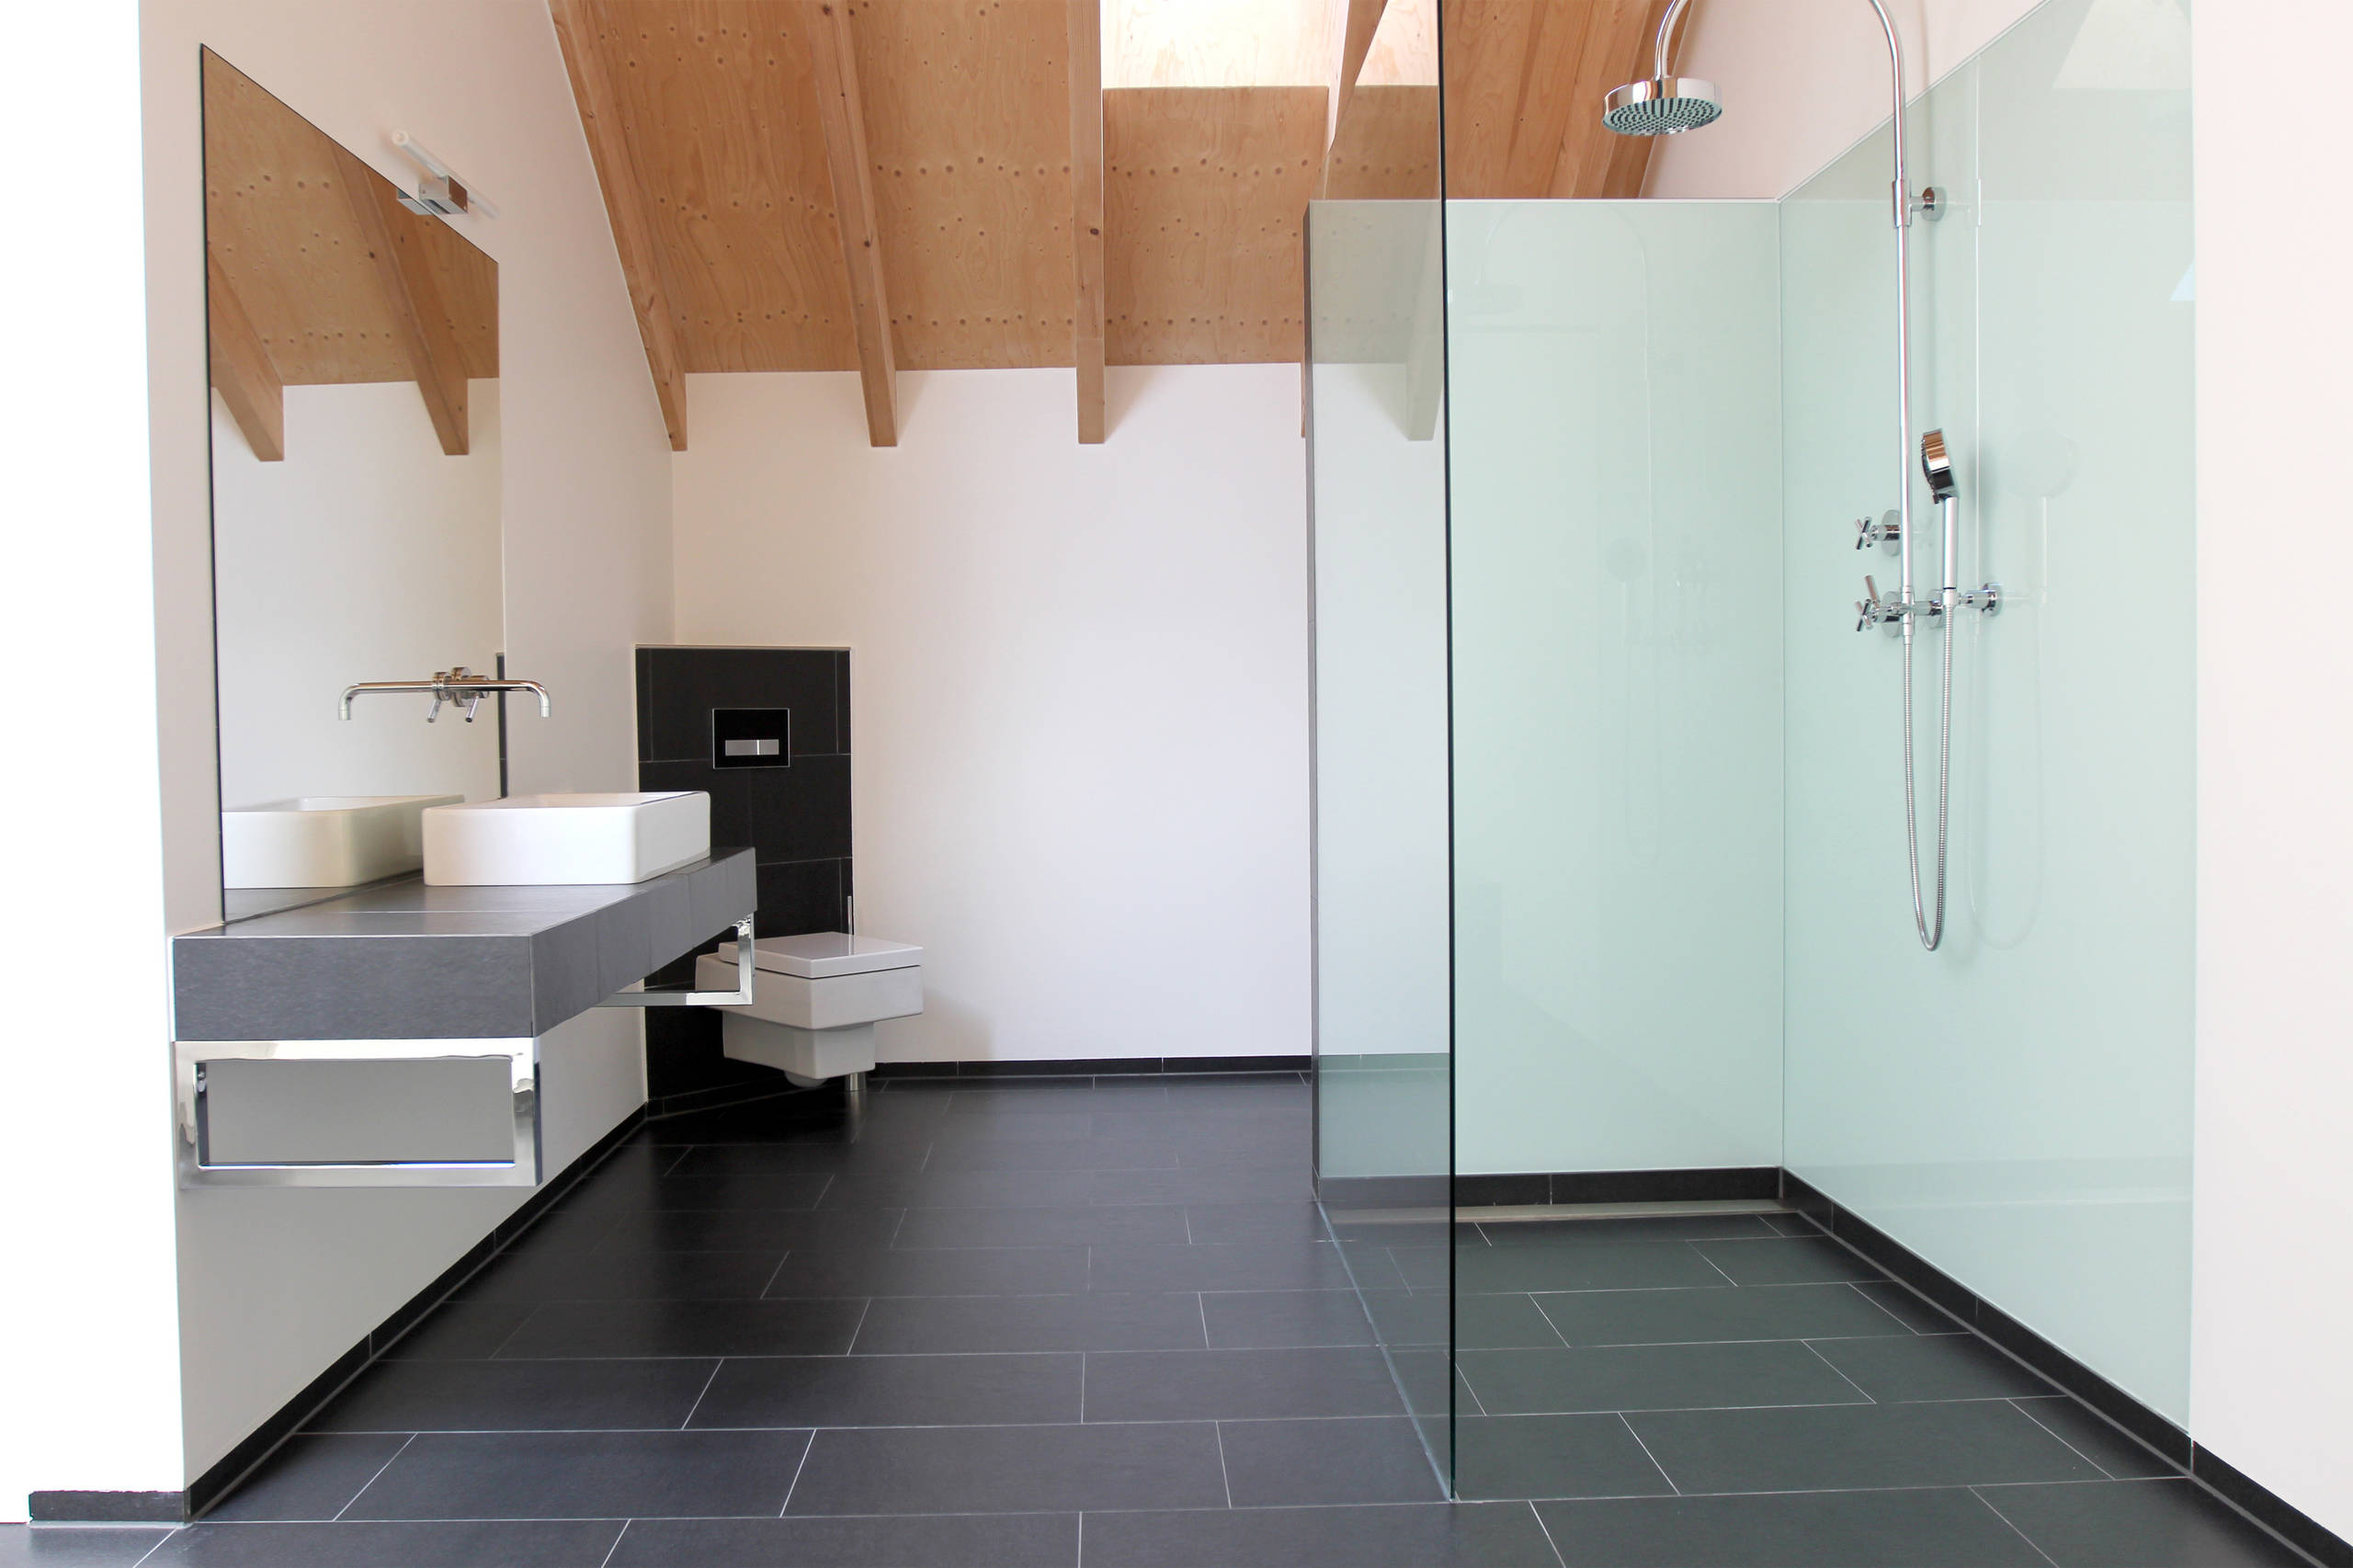 75 Glass Sheet Slate Floor Bathroom Ideas You'll Love - July, 2022 | Houzz